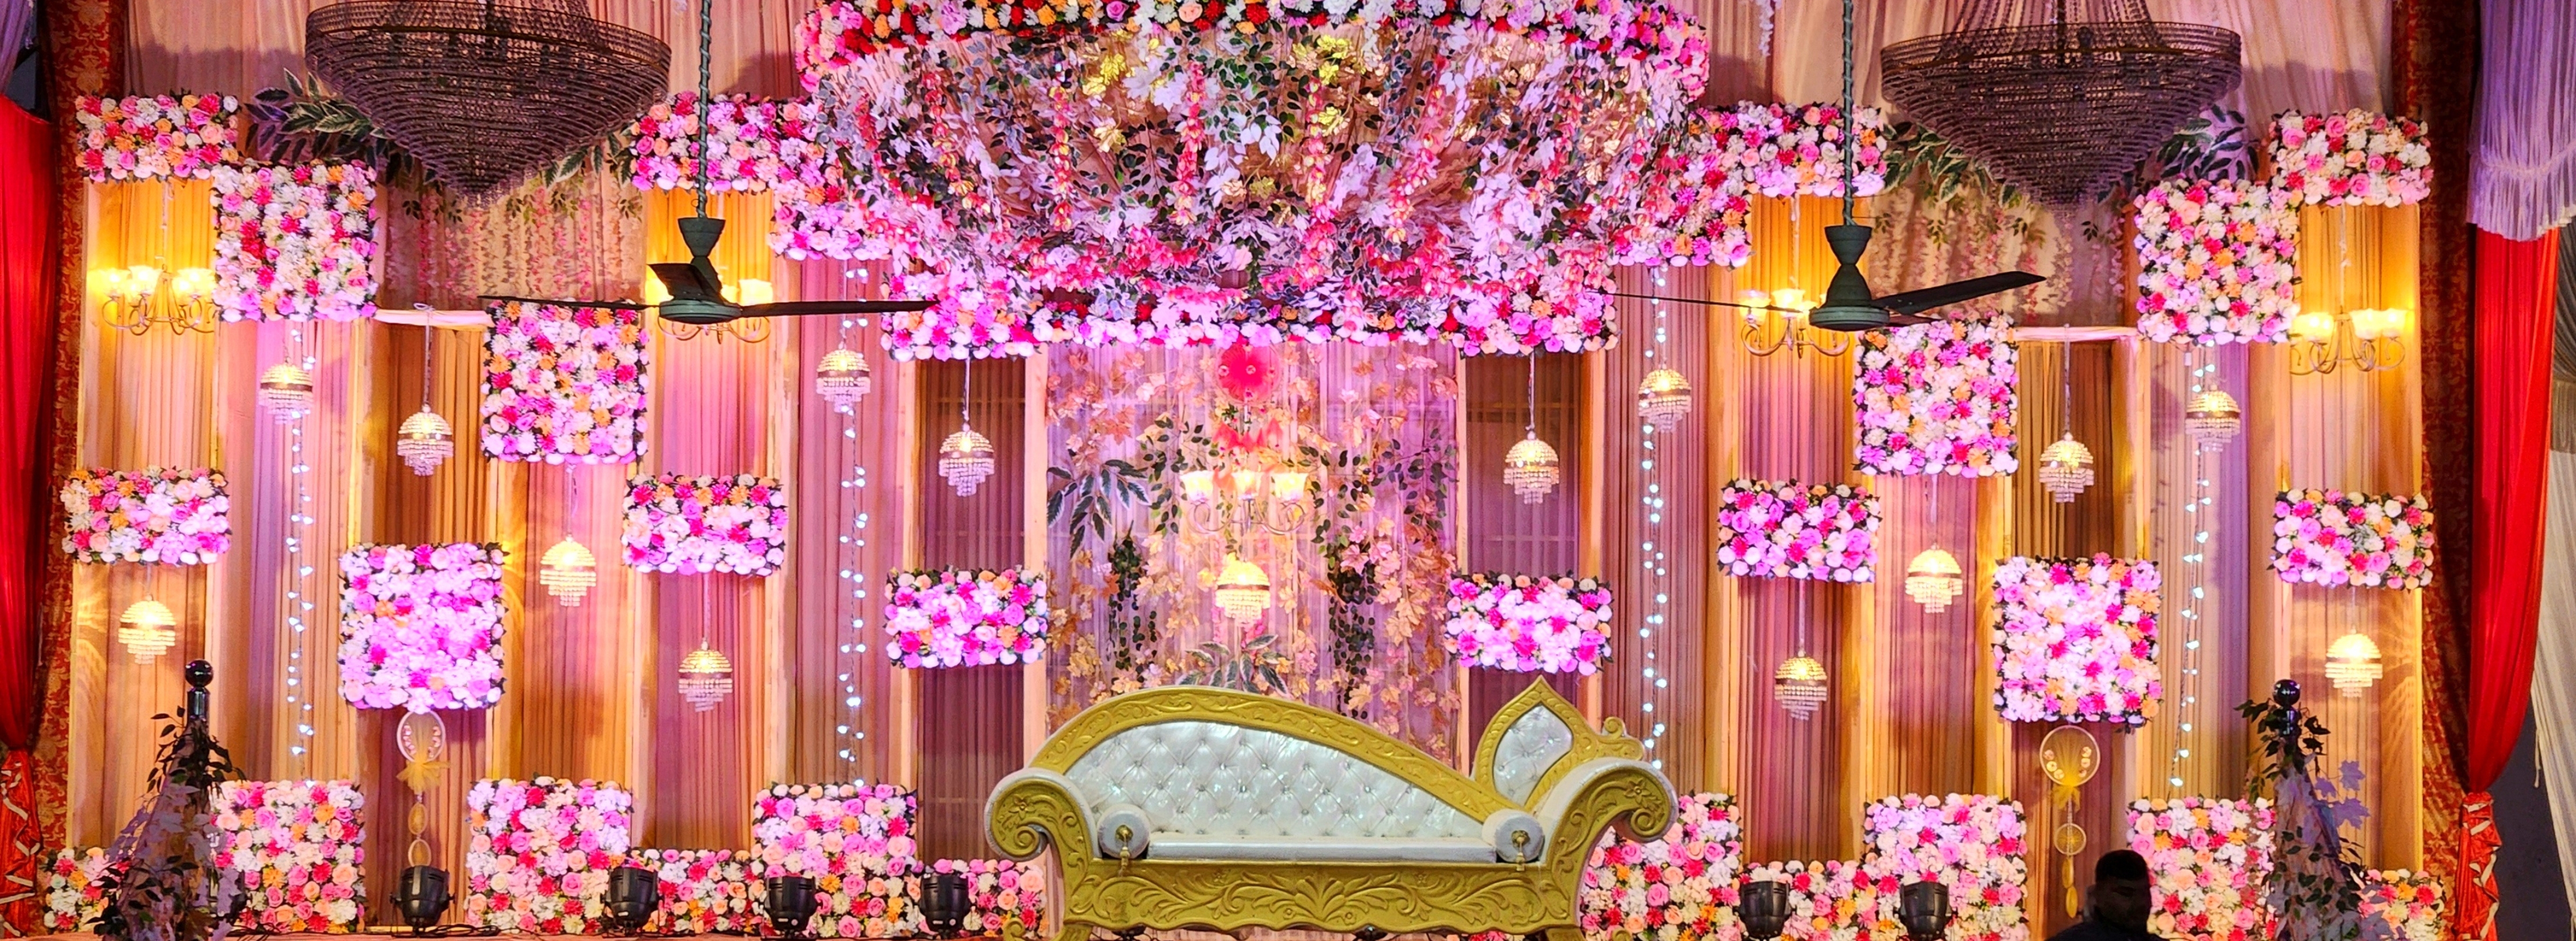 Guru Nanak Marriage Lawn for Your Perfect Wedding Venue